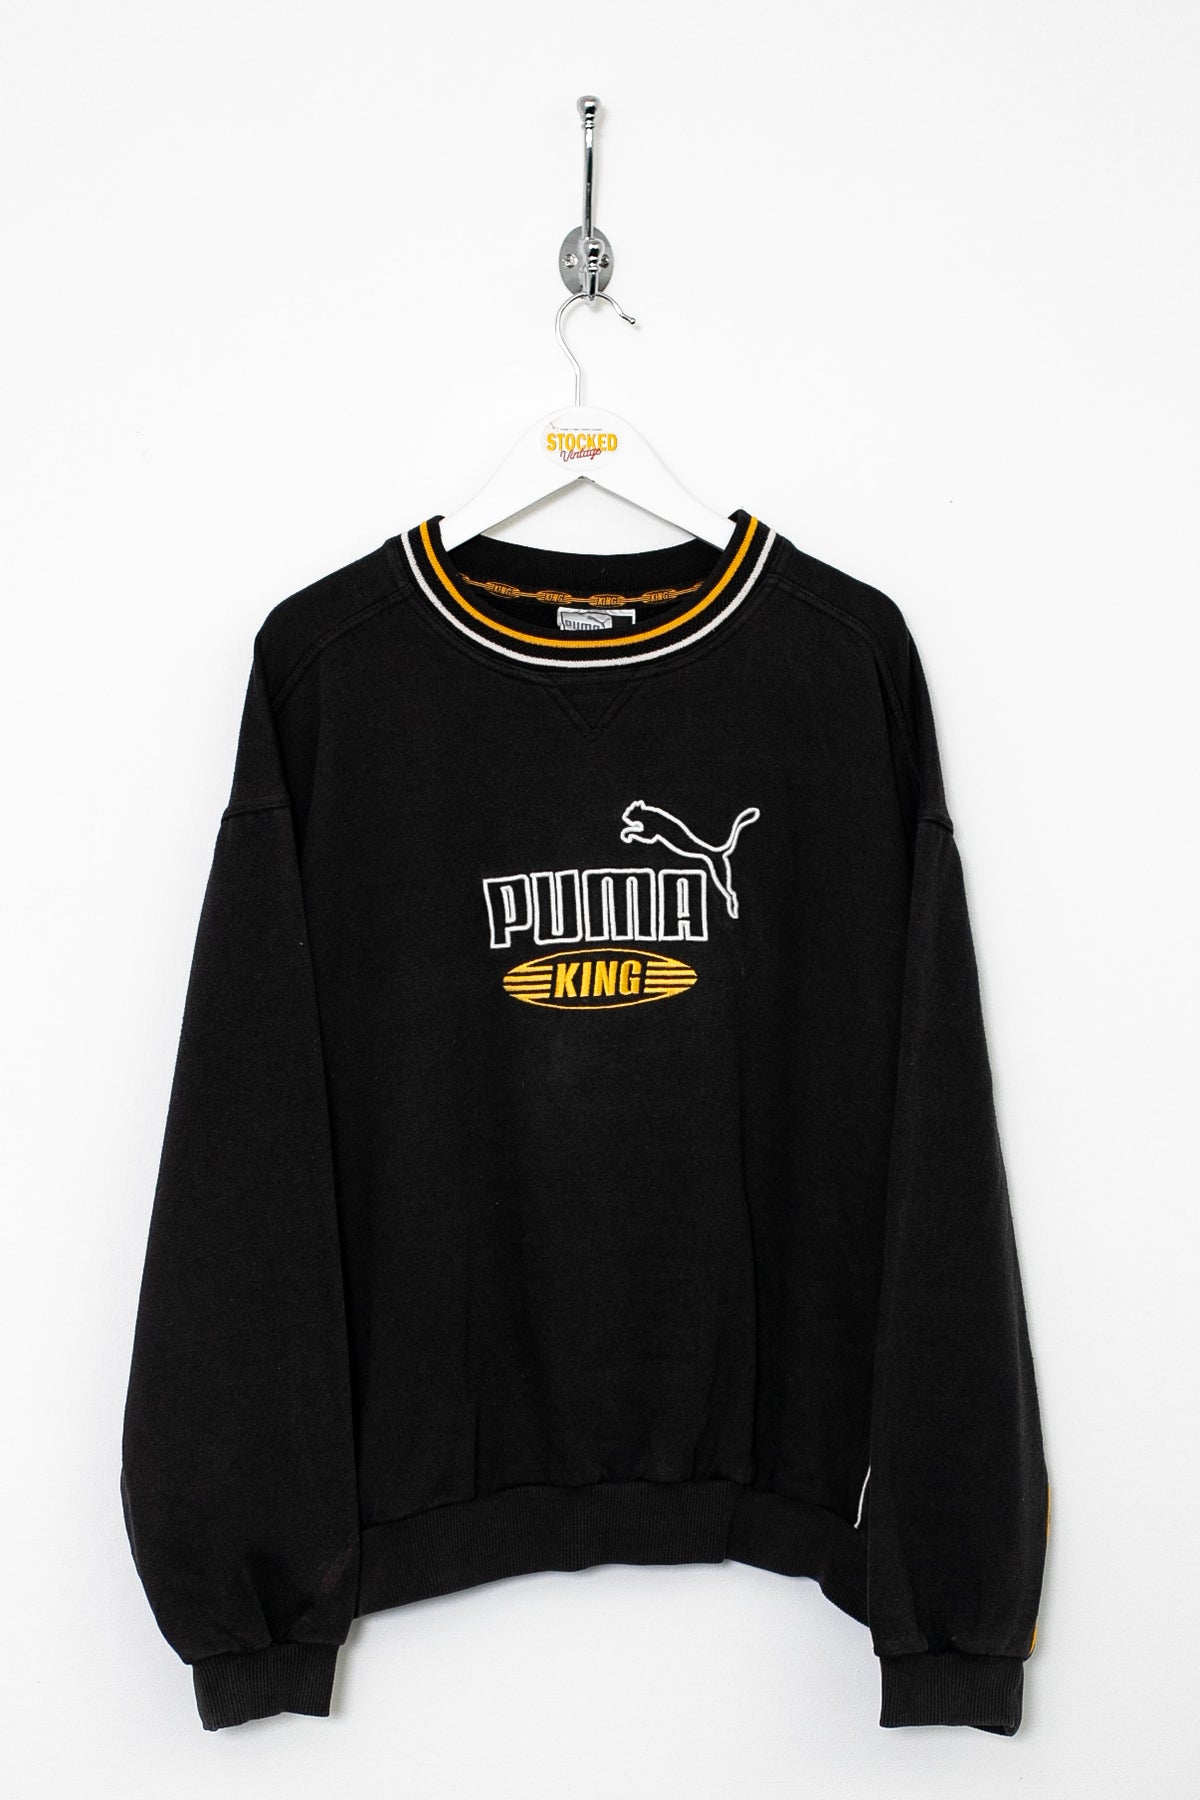 00s Puma Sweatshirt (M)